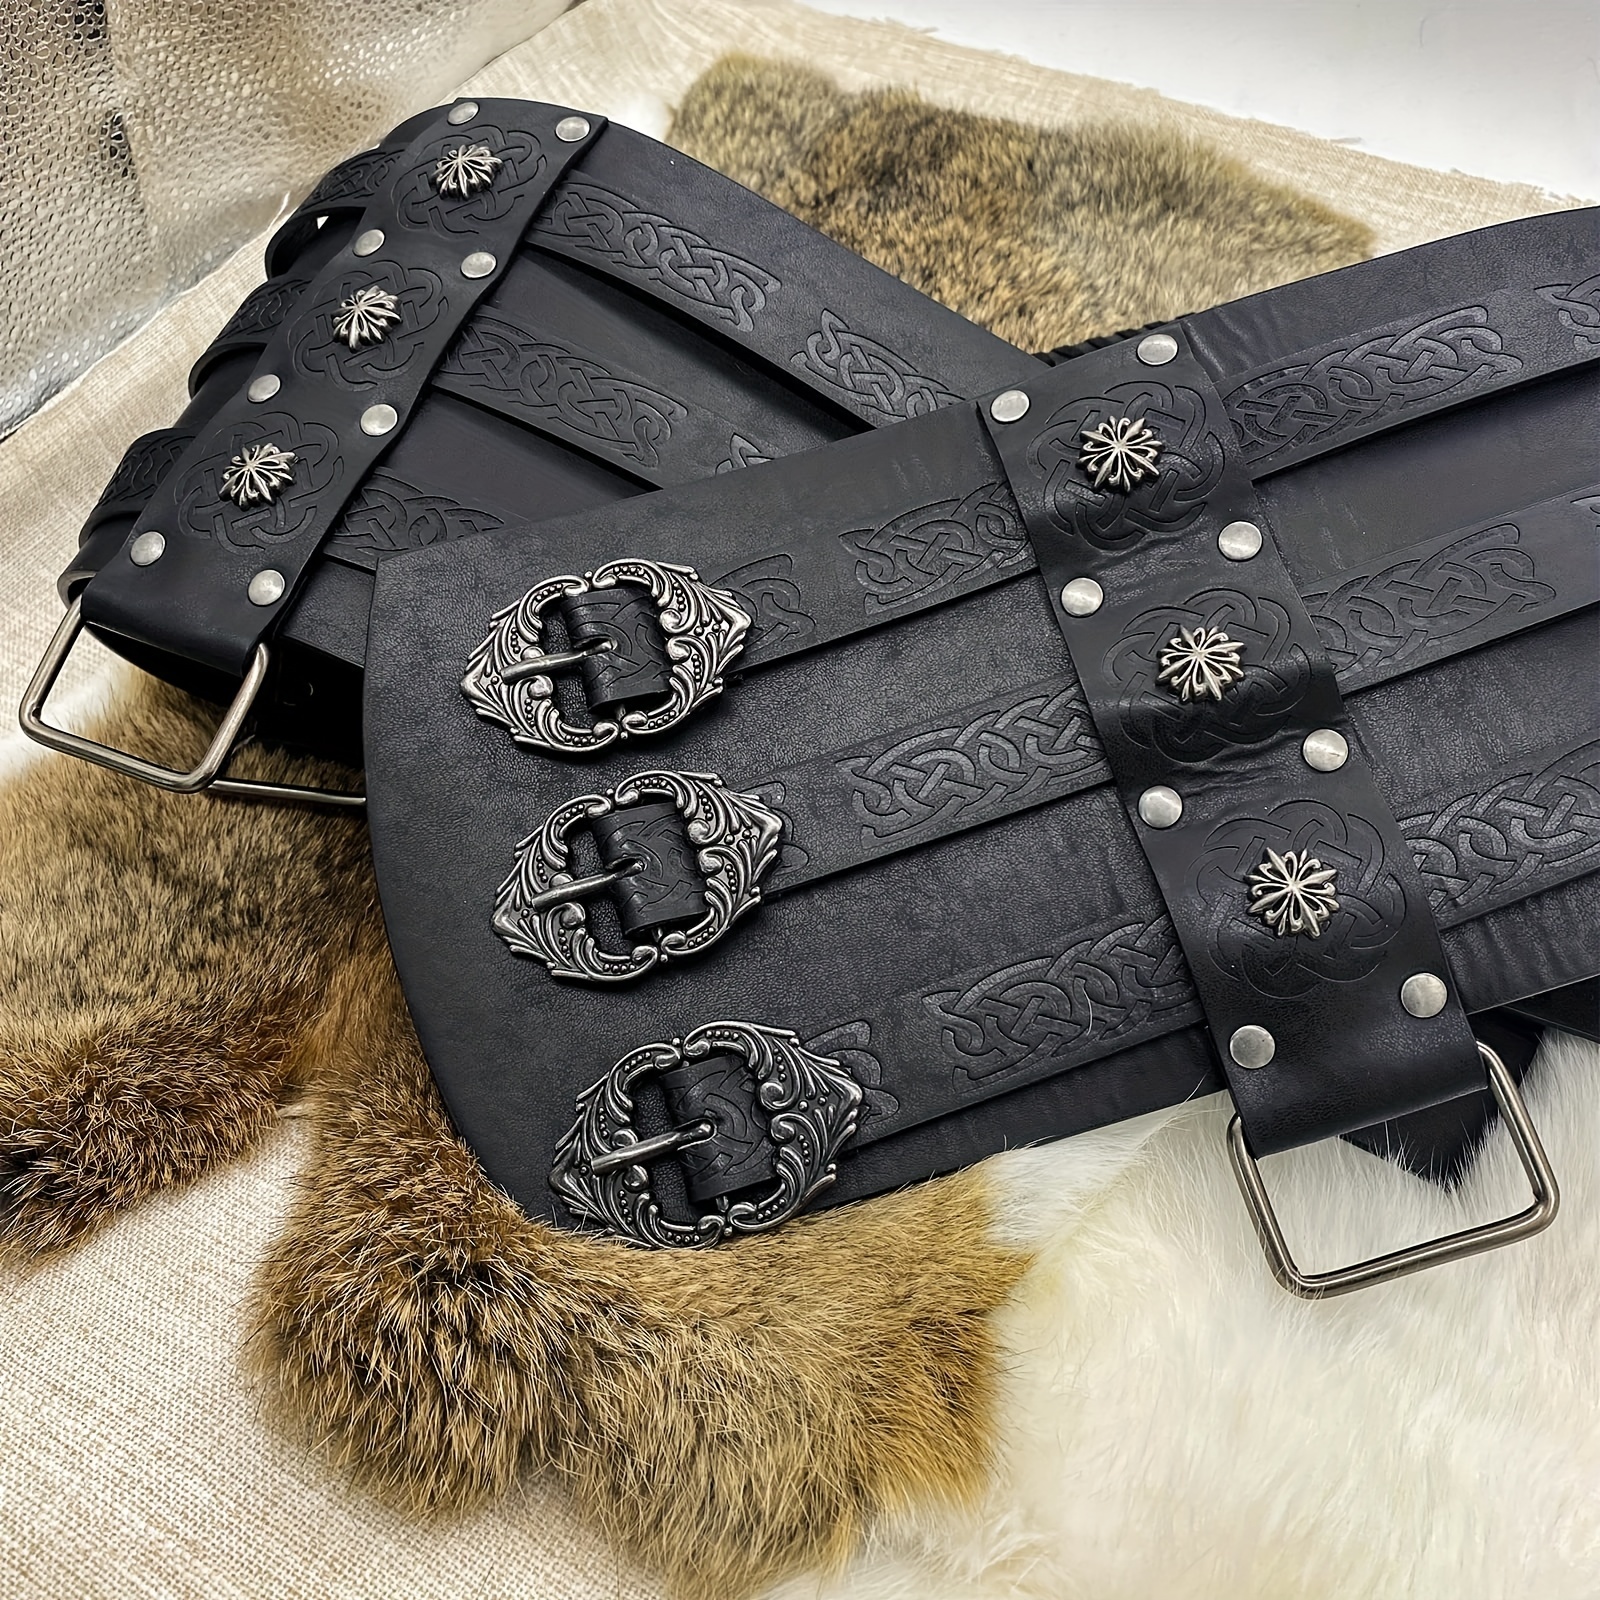 Mens Belt Leather, Handmade leather waist belt, Viking belt, wide leather  belt, leather men's corset, brown corset belt, athletic belt, viking  corset